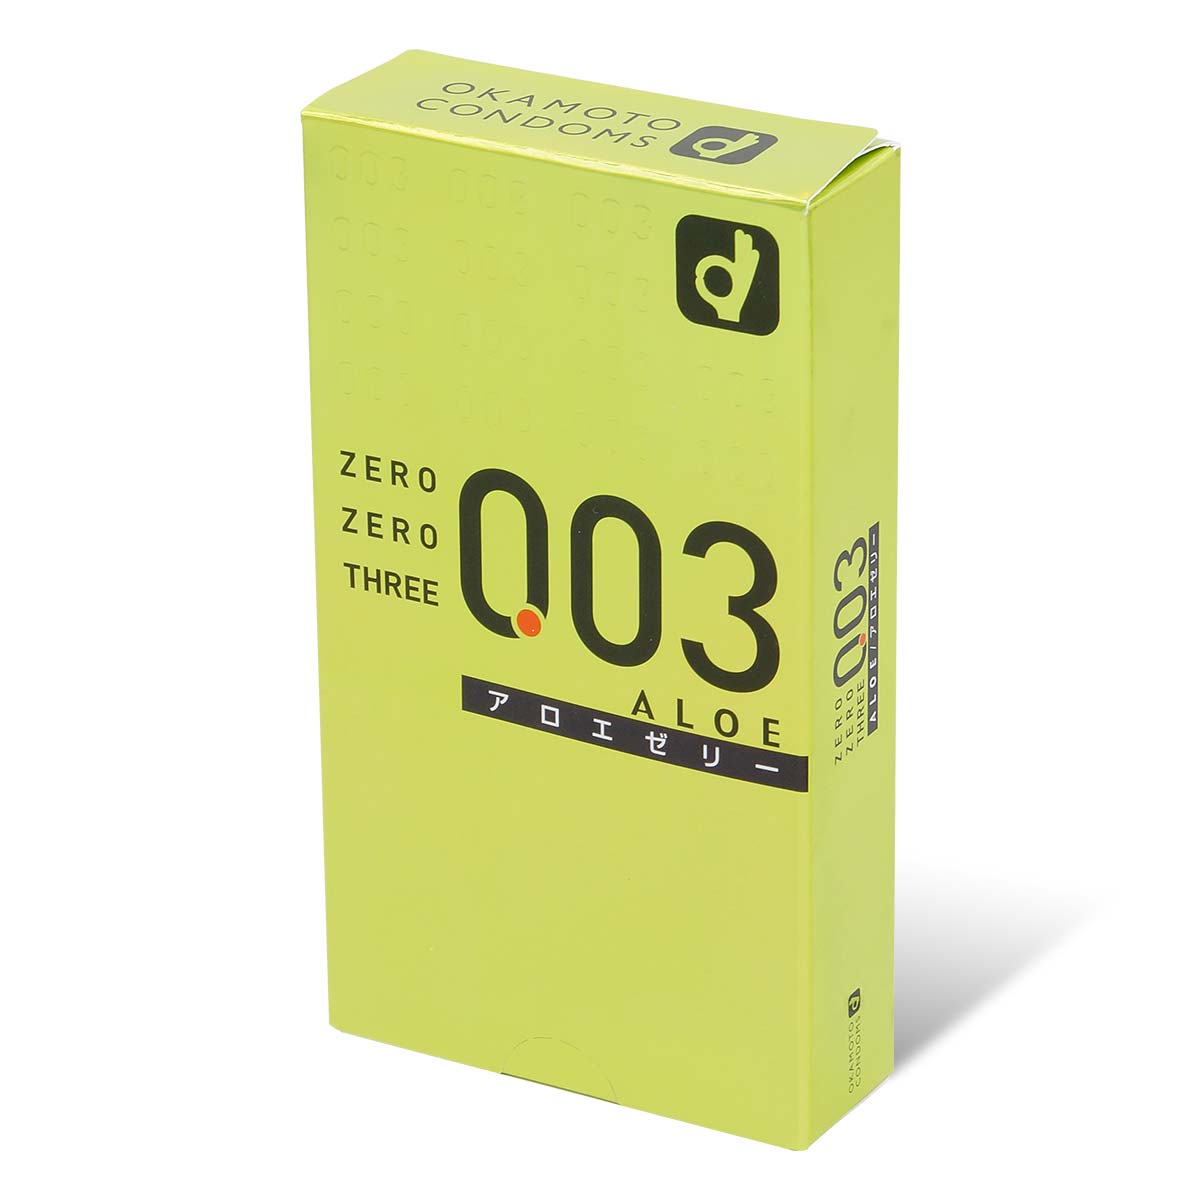 Zero Zero Three 0.03 Aloe (Japan Edition) 10's Pack Latex Condom (Short Expiry)-p_1